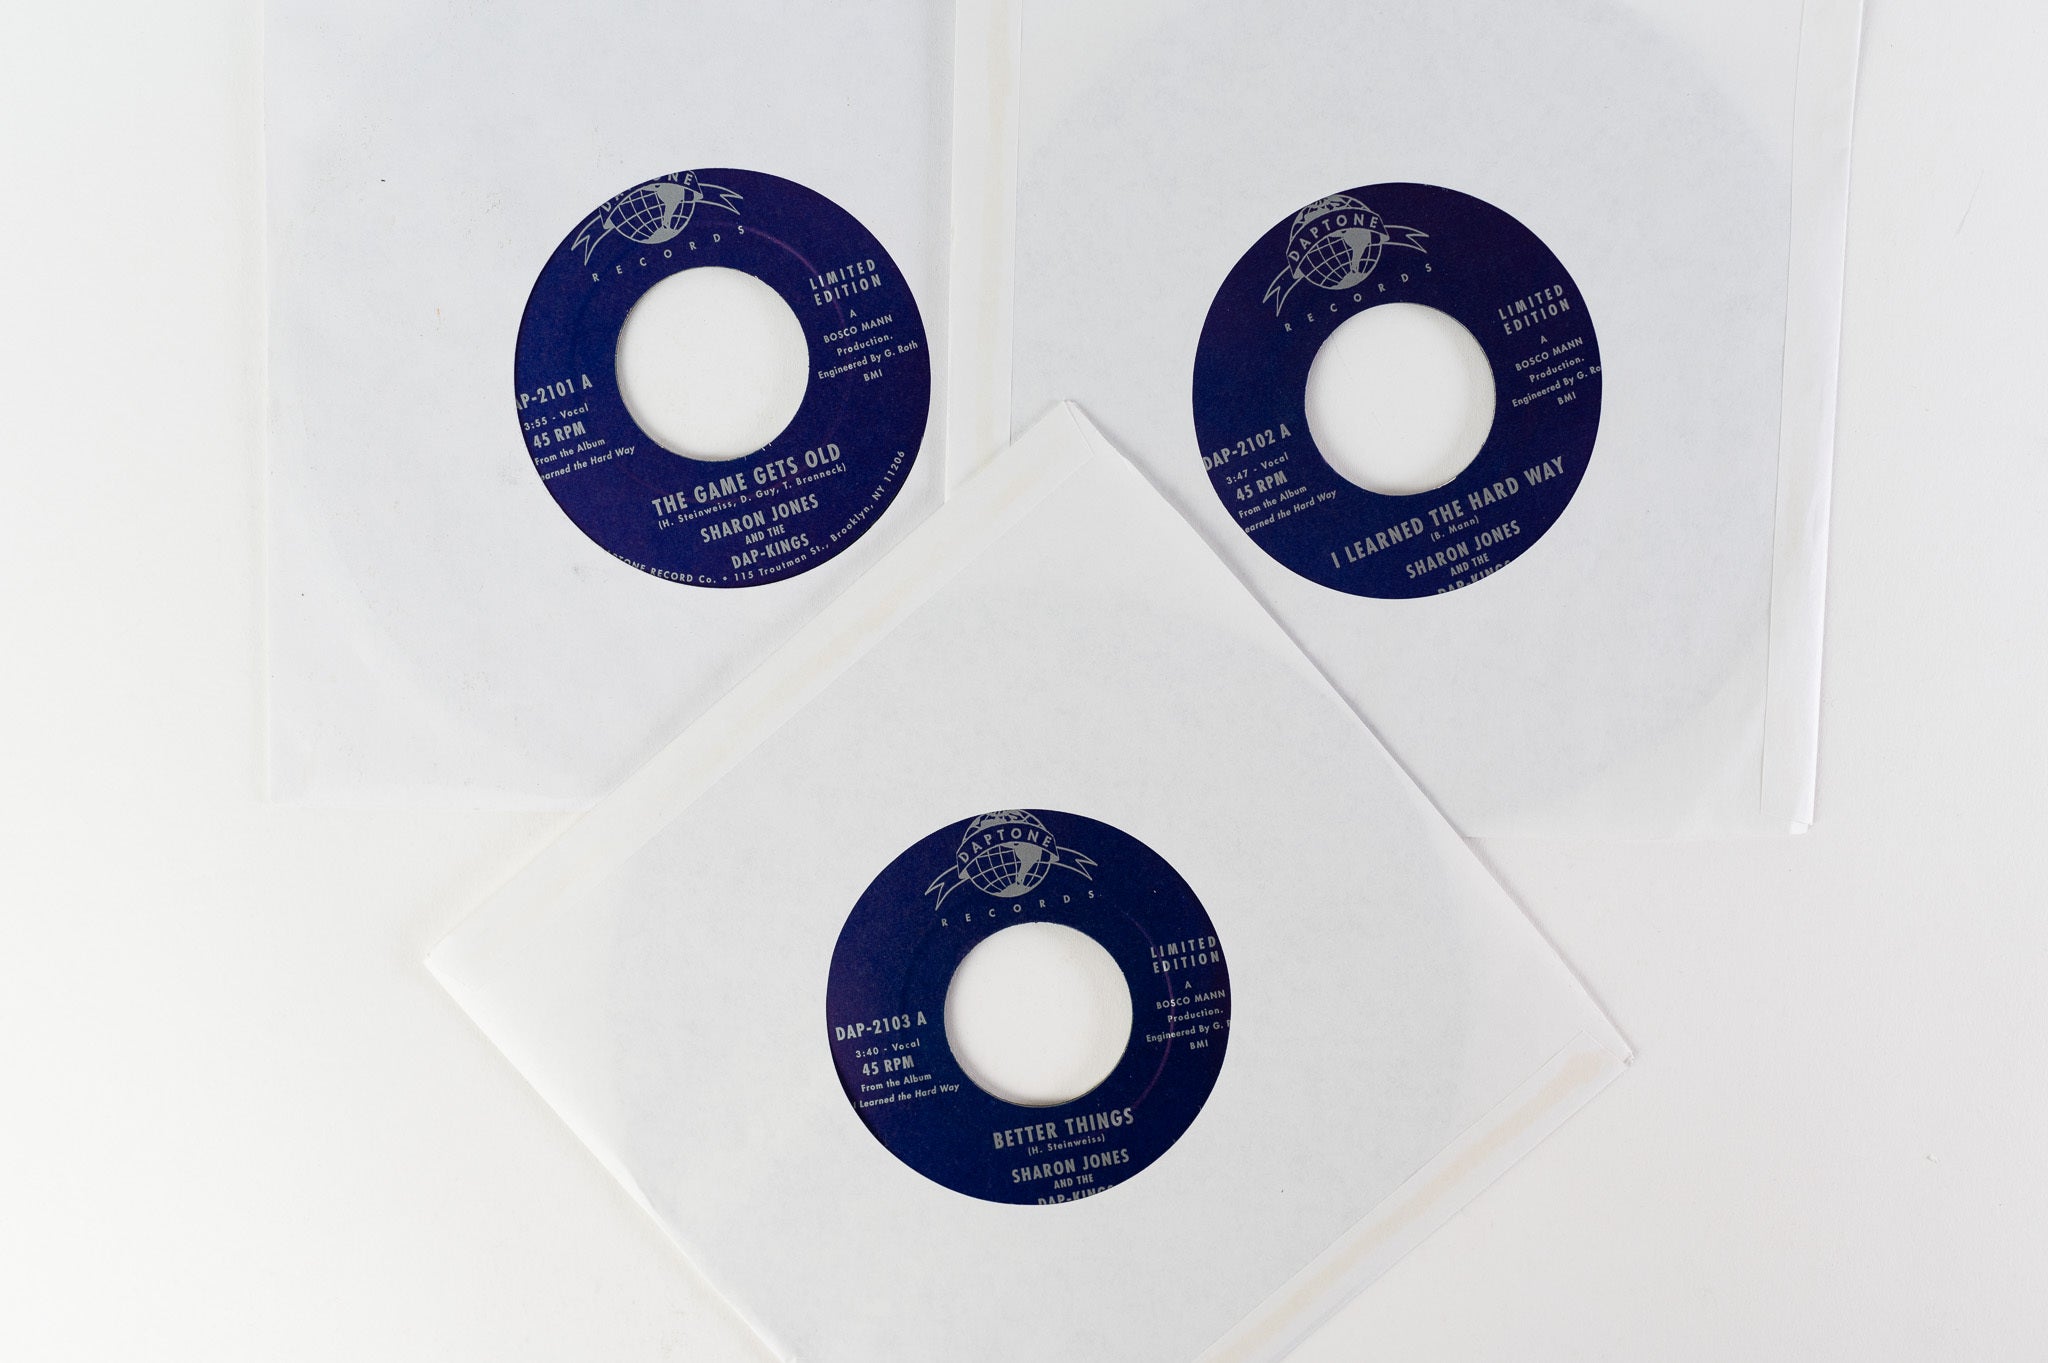 Sharon Jones & The Dap-Kings - I Learned The Hard Way on Daptone Ltd RSD Black Friday 2010 45 RPM Box Set